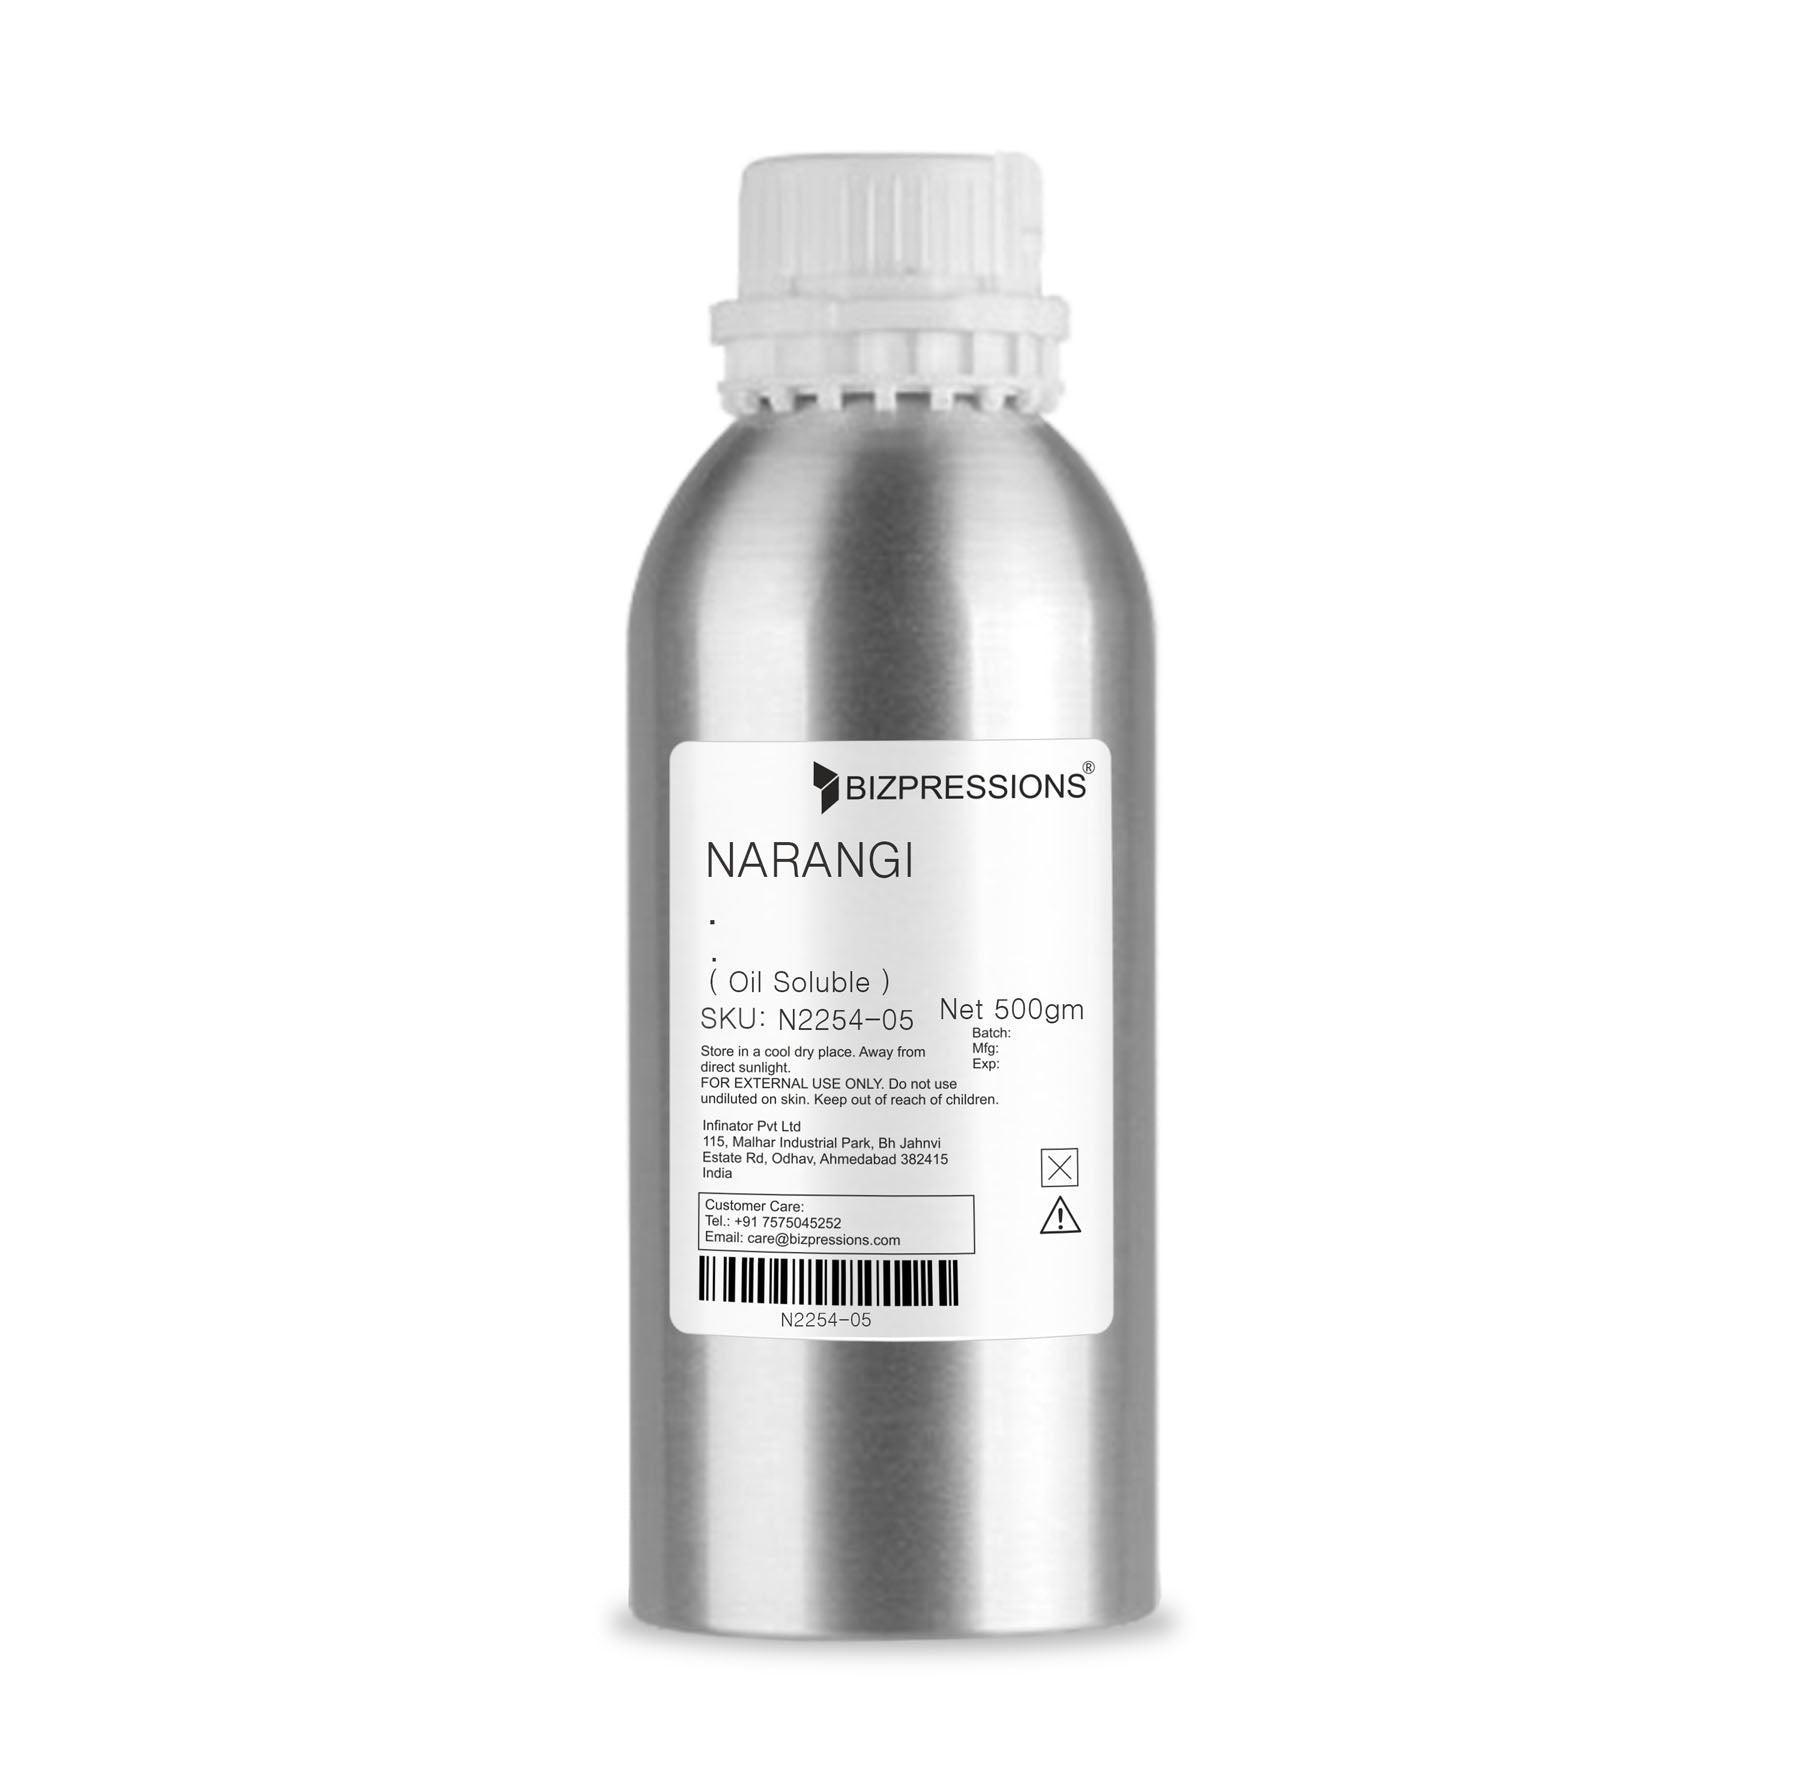 NARANGI - Fragrance ( Oil Soluble ) - 500 gm